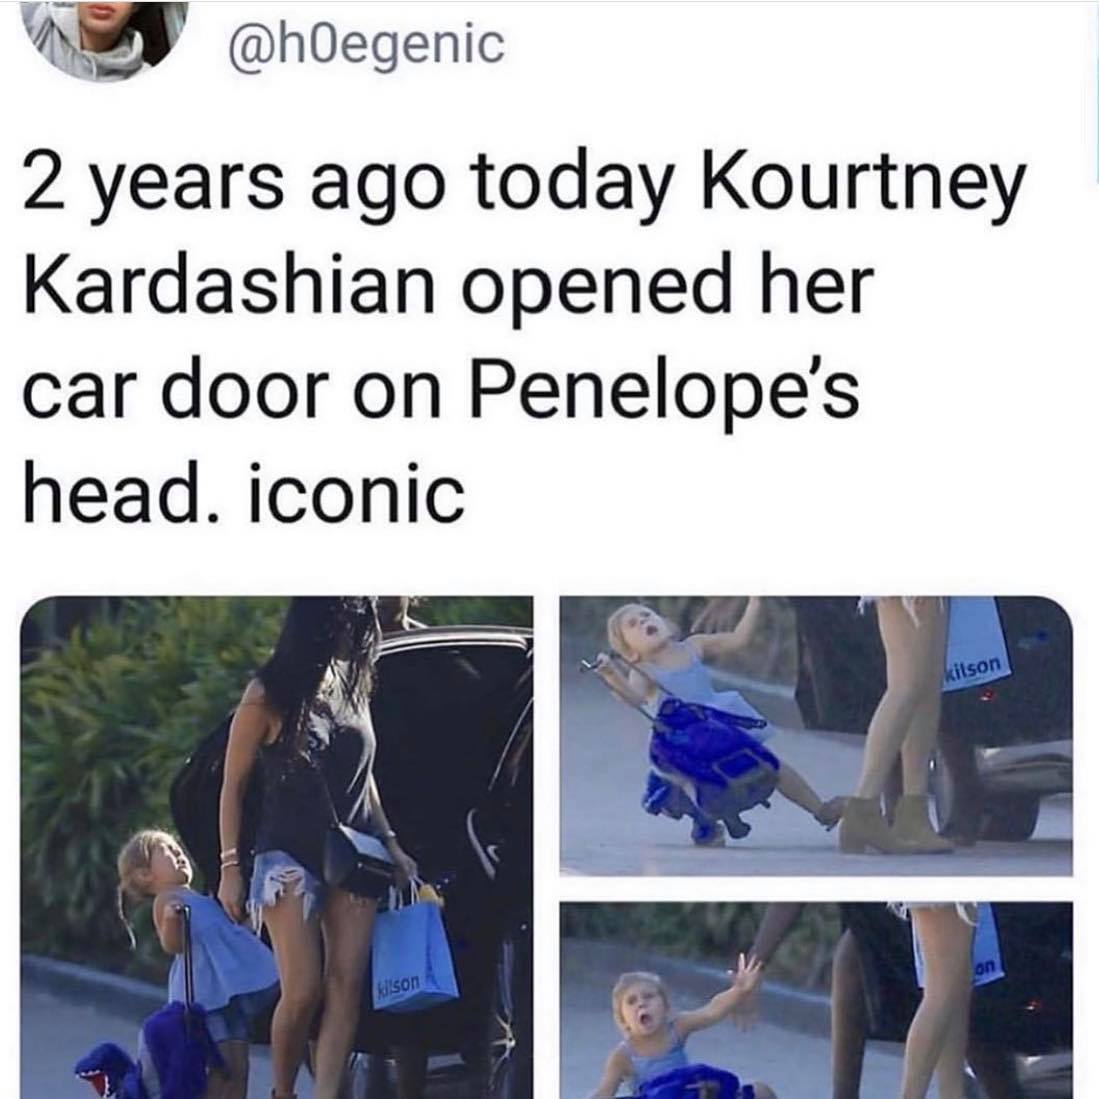 kourtney kardashian car door meme - 2 years ago today Kourtney Kardashian opened her car door on Penelope's head, iconic kilson on ilson